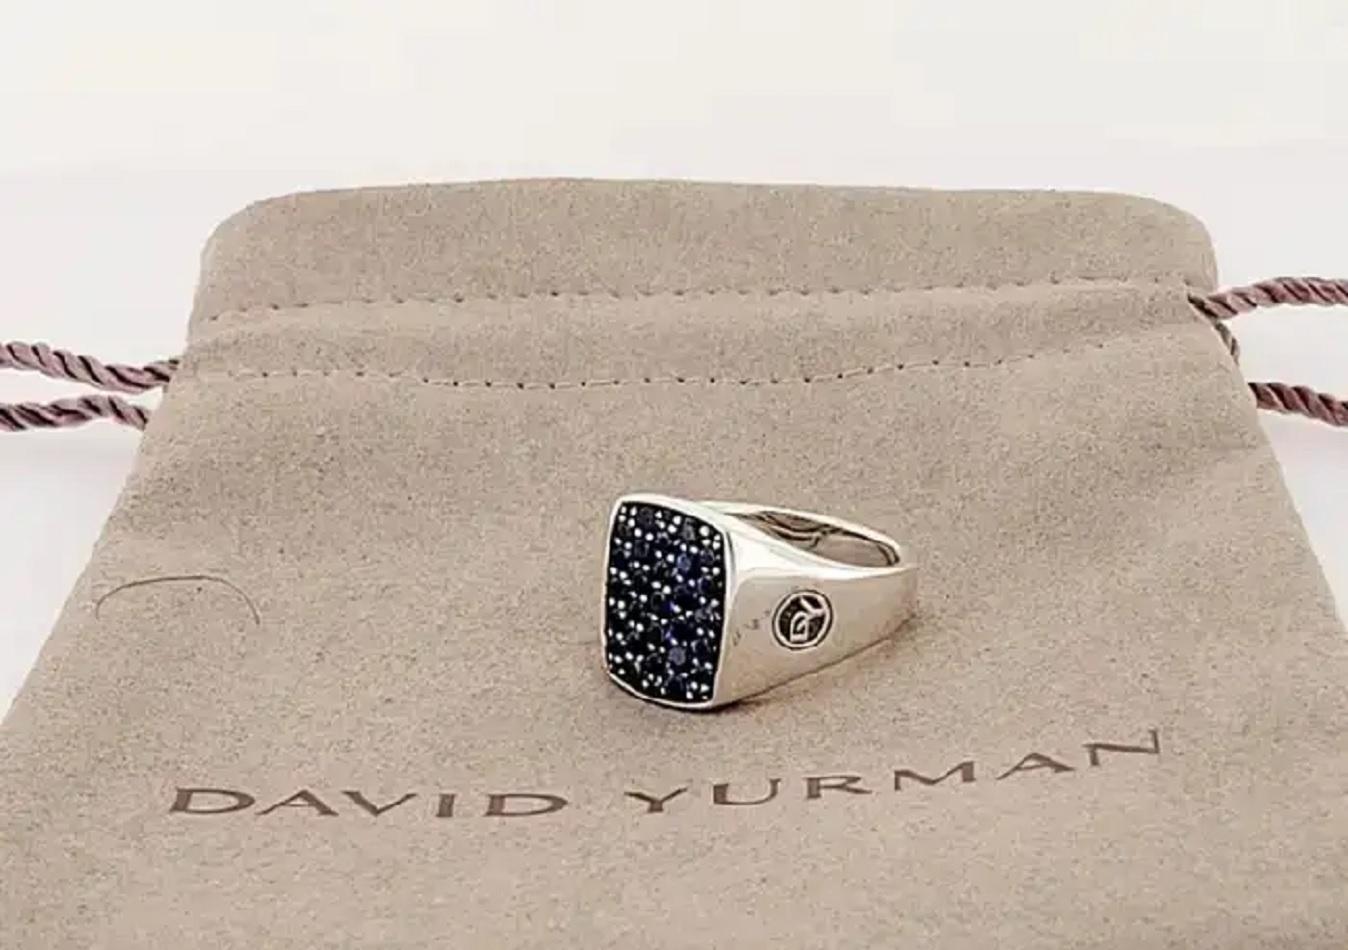 david yurman sapphire ring